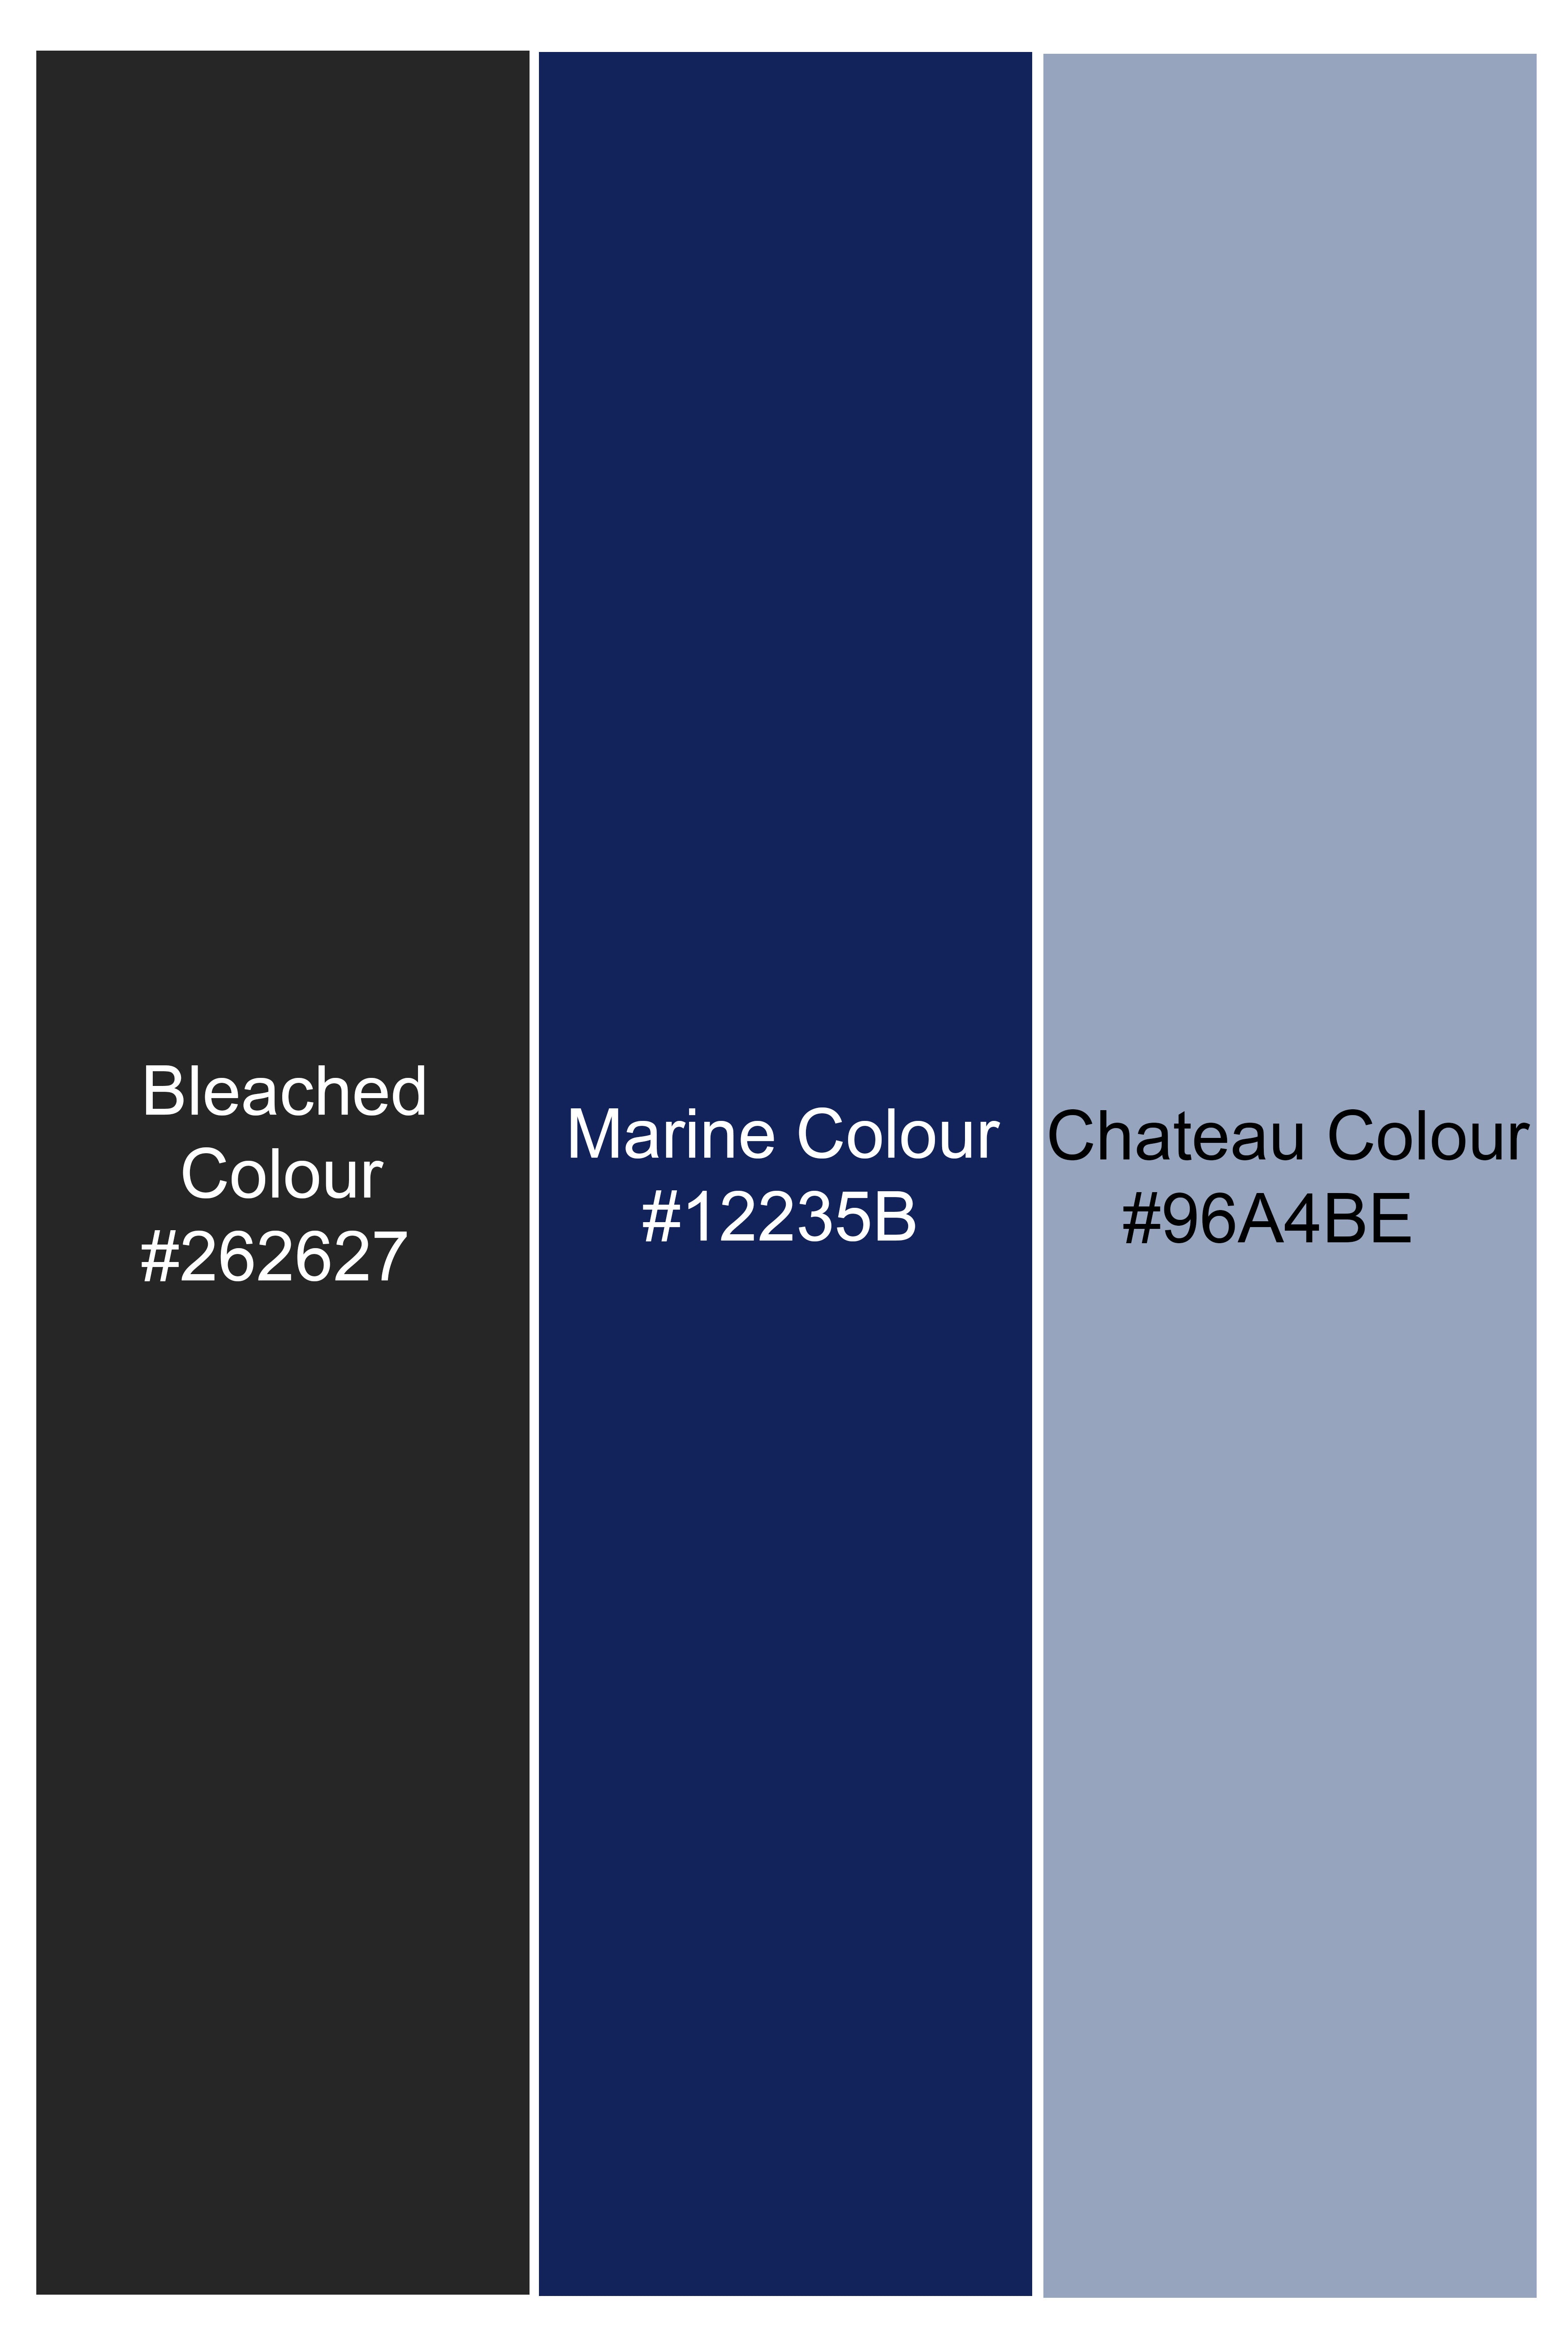 Bleached Black and Marine Blue Plaid Tweed Waistcoat V2907-36, V2907-38, V2907-40, V2907-42, V2907-44, V2907-46, V2907-48, V2907-50, V2907-07, V2907-54, V2907-56, V2907-58, V2907-60